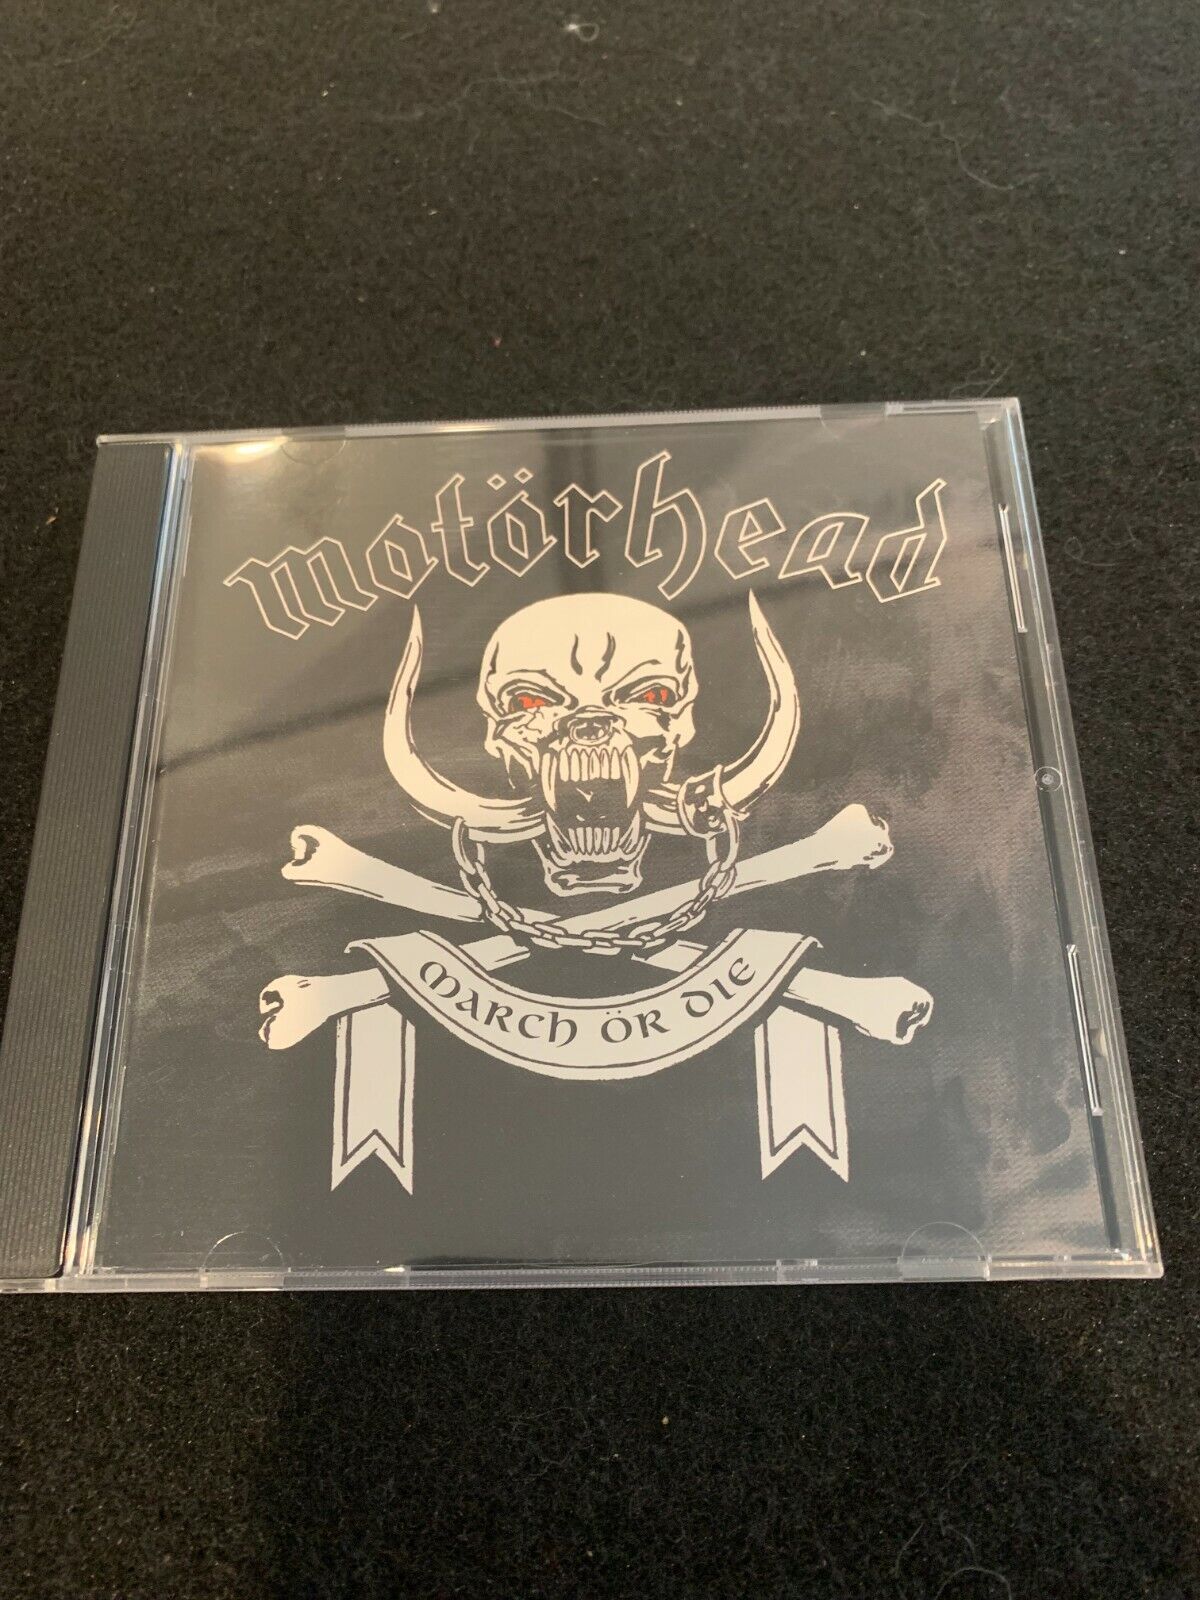 Language:March or Die:MOTÖRHEAD - CD You Pick - Ace of Spades Best Of Lemmy Kilmister Motorhead MORE!